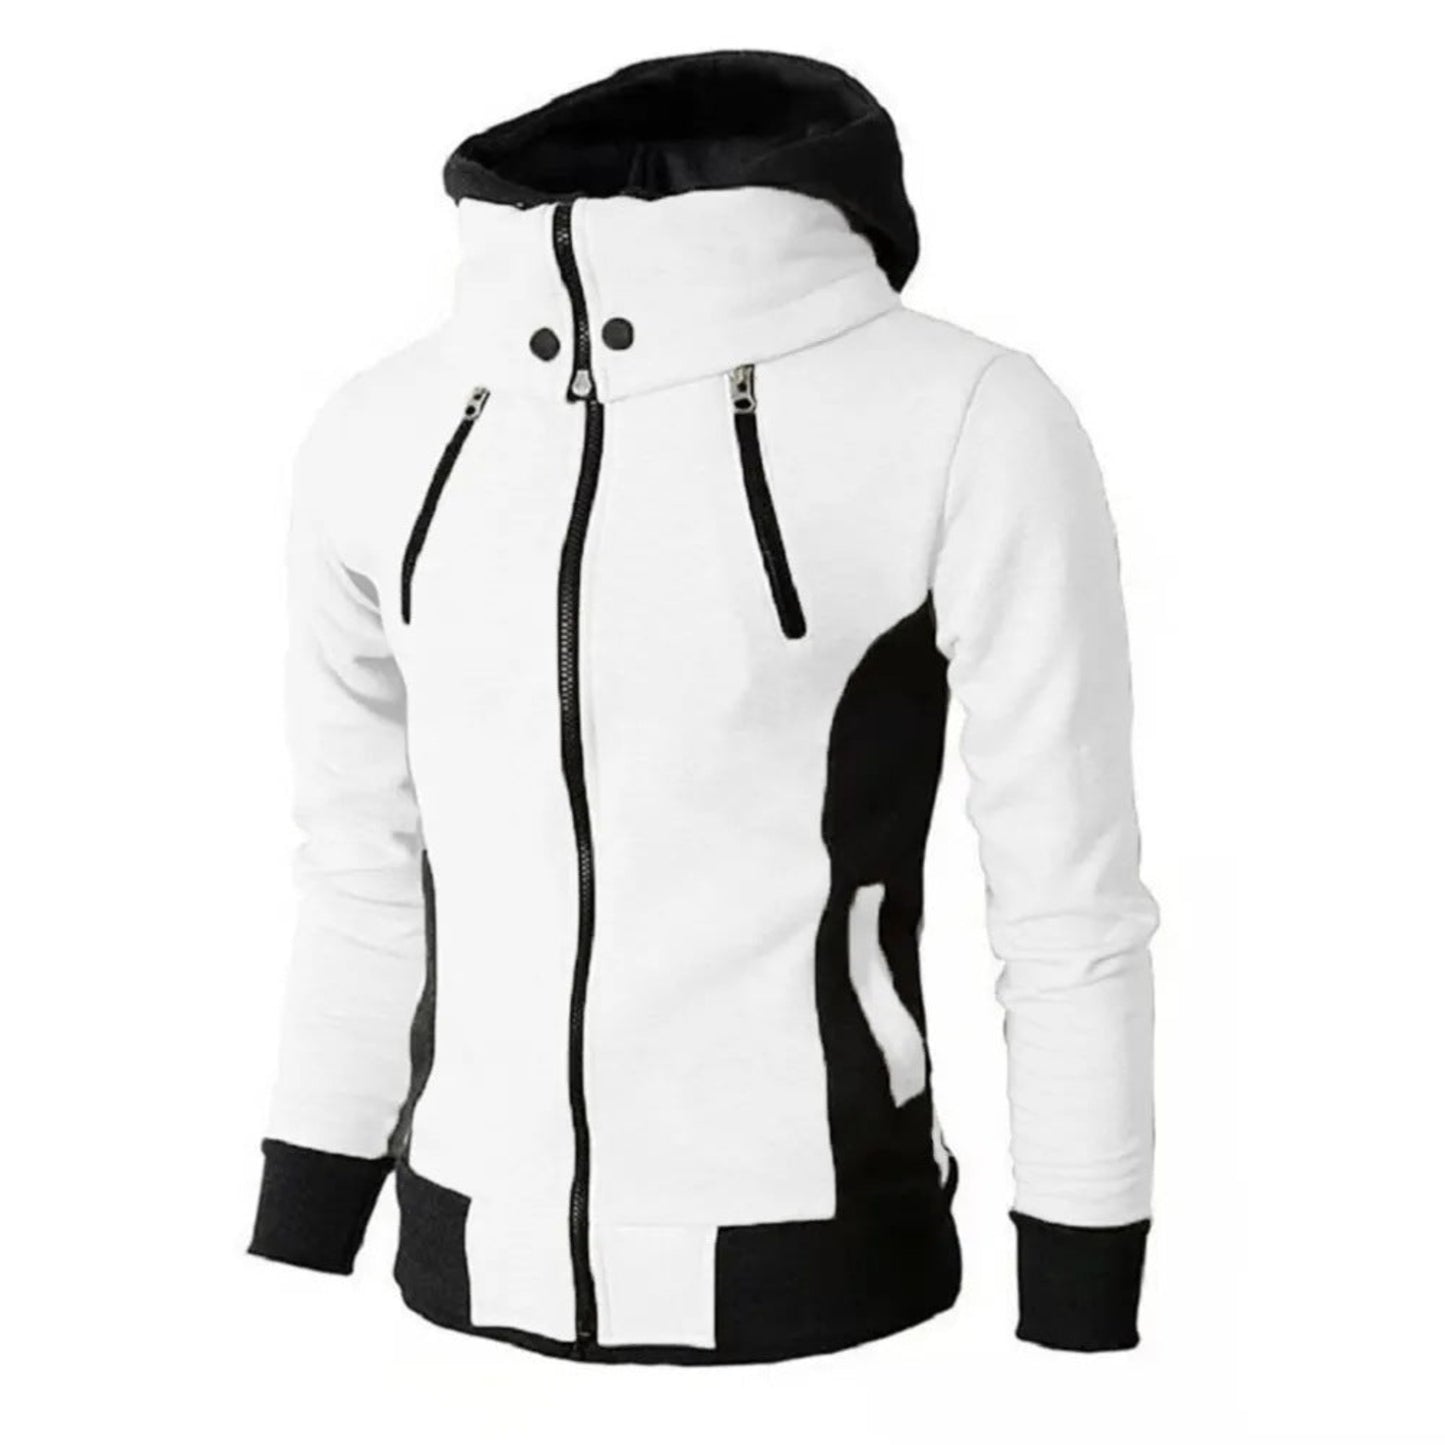 Unisex Jacket pure white color 